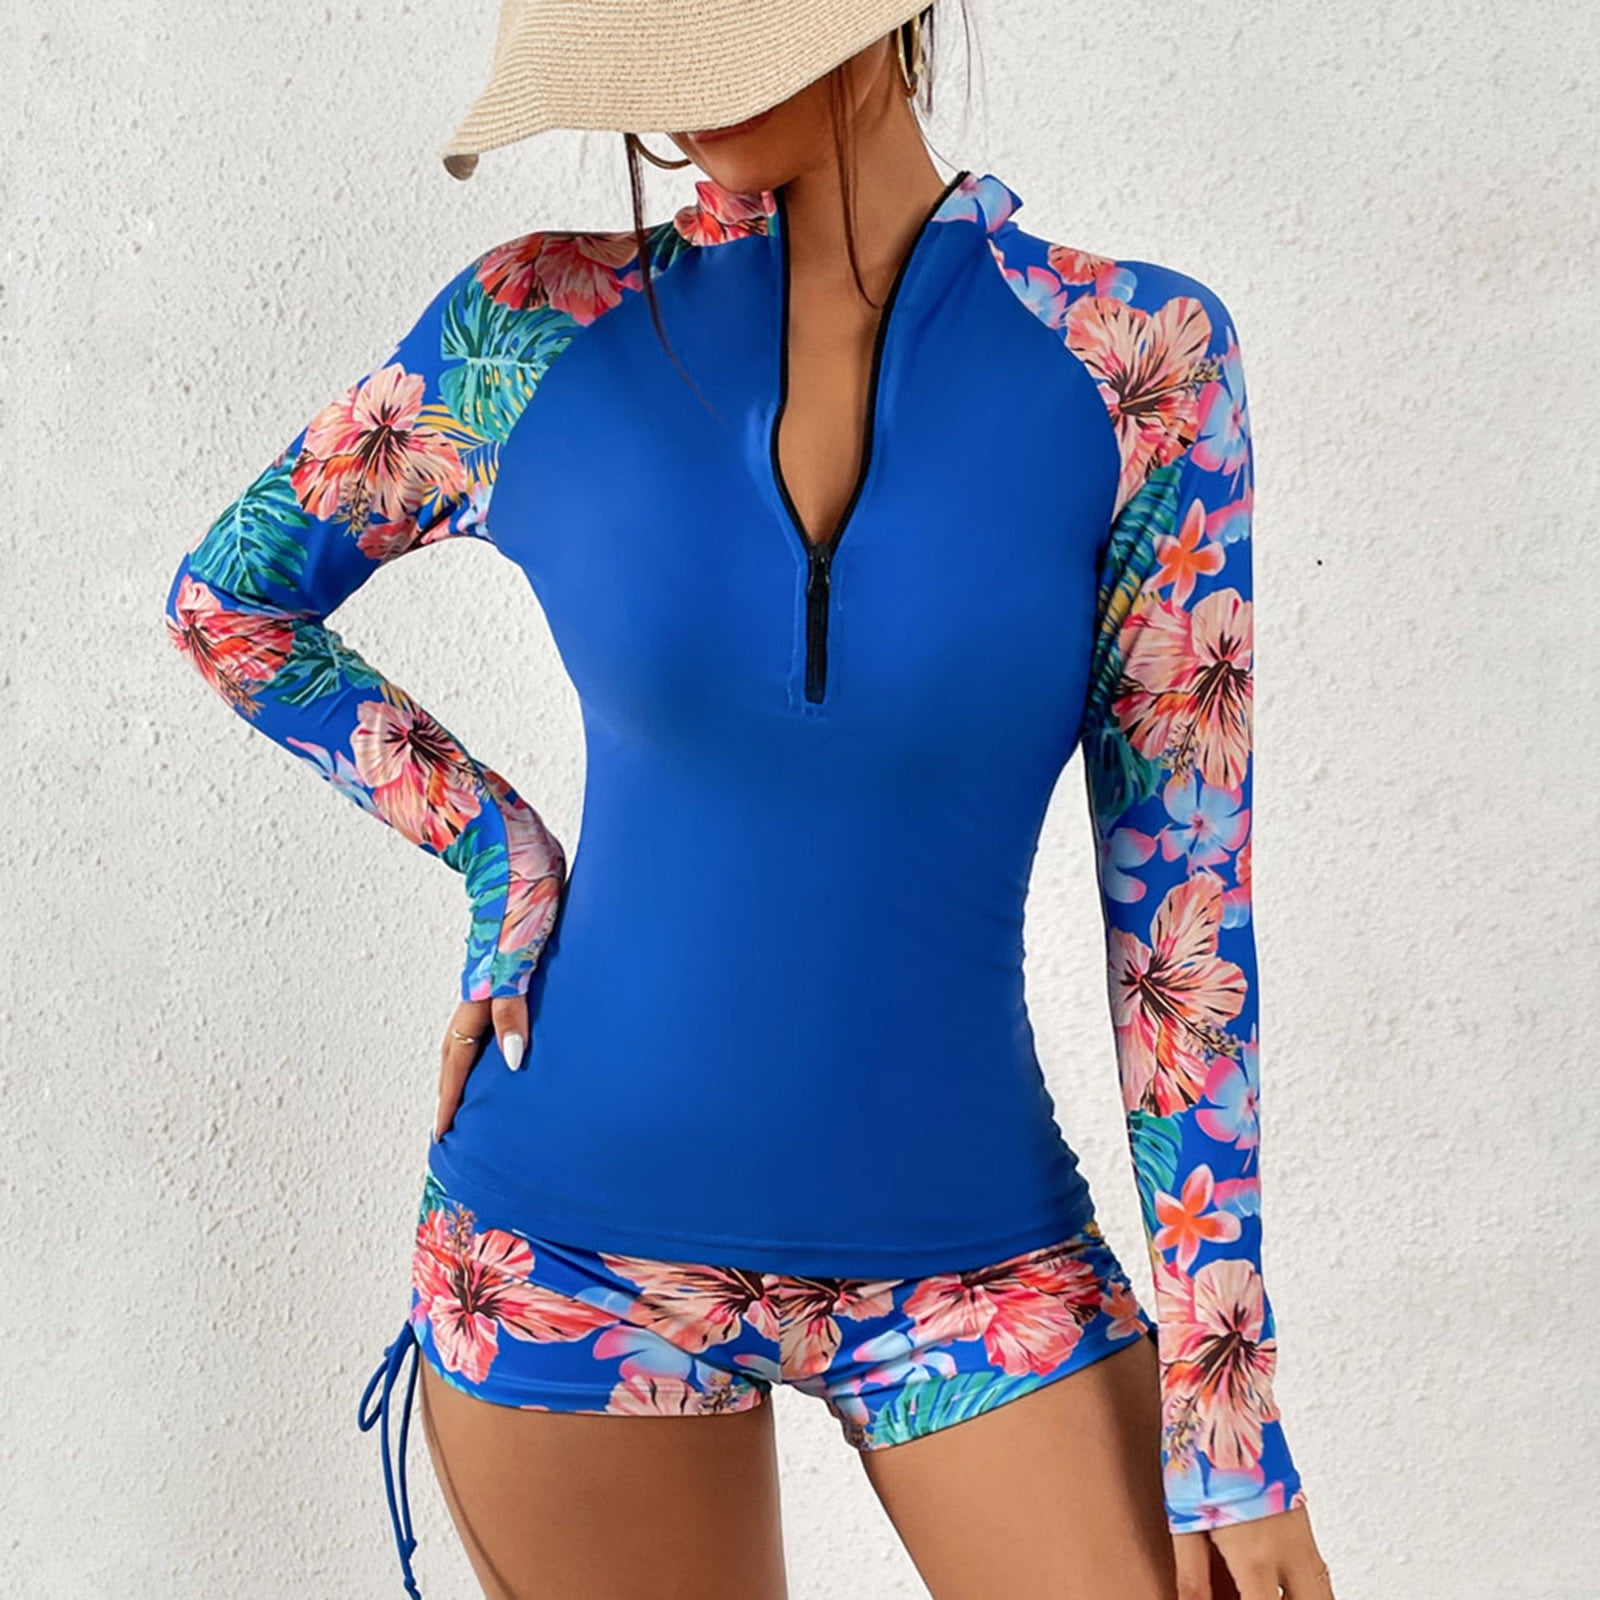 jsaierl Womens Swimsuits One Piece Quarter Zip Rash Guard Bathing Suit  Tropical Print Short Sleeve Modest Swimwear Monokini for Beach Party  Vacation 